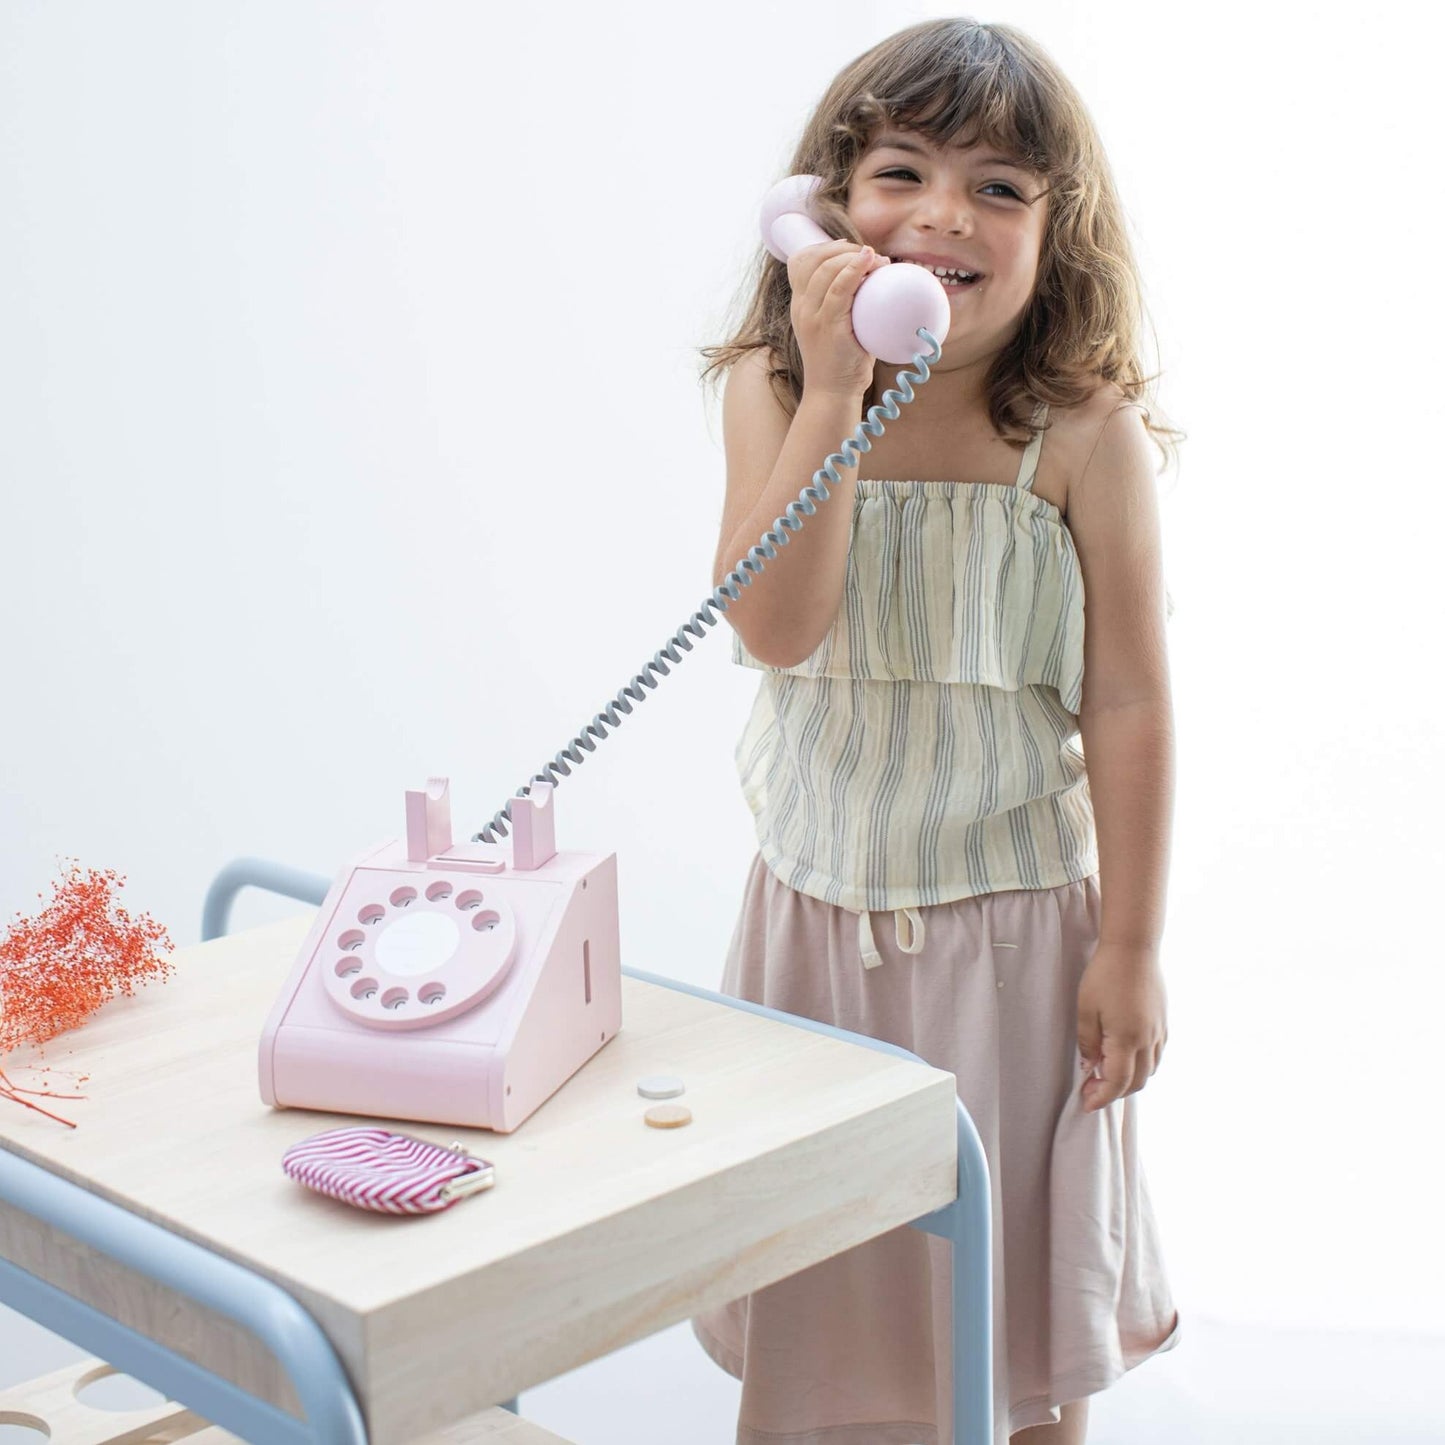 Kiko & GG Wooden Play Telephone - Pink